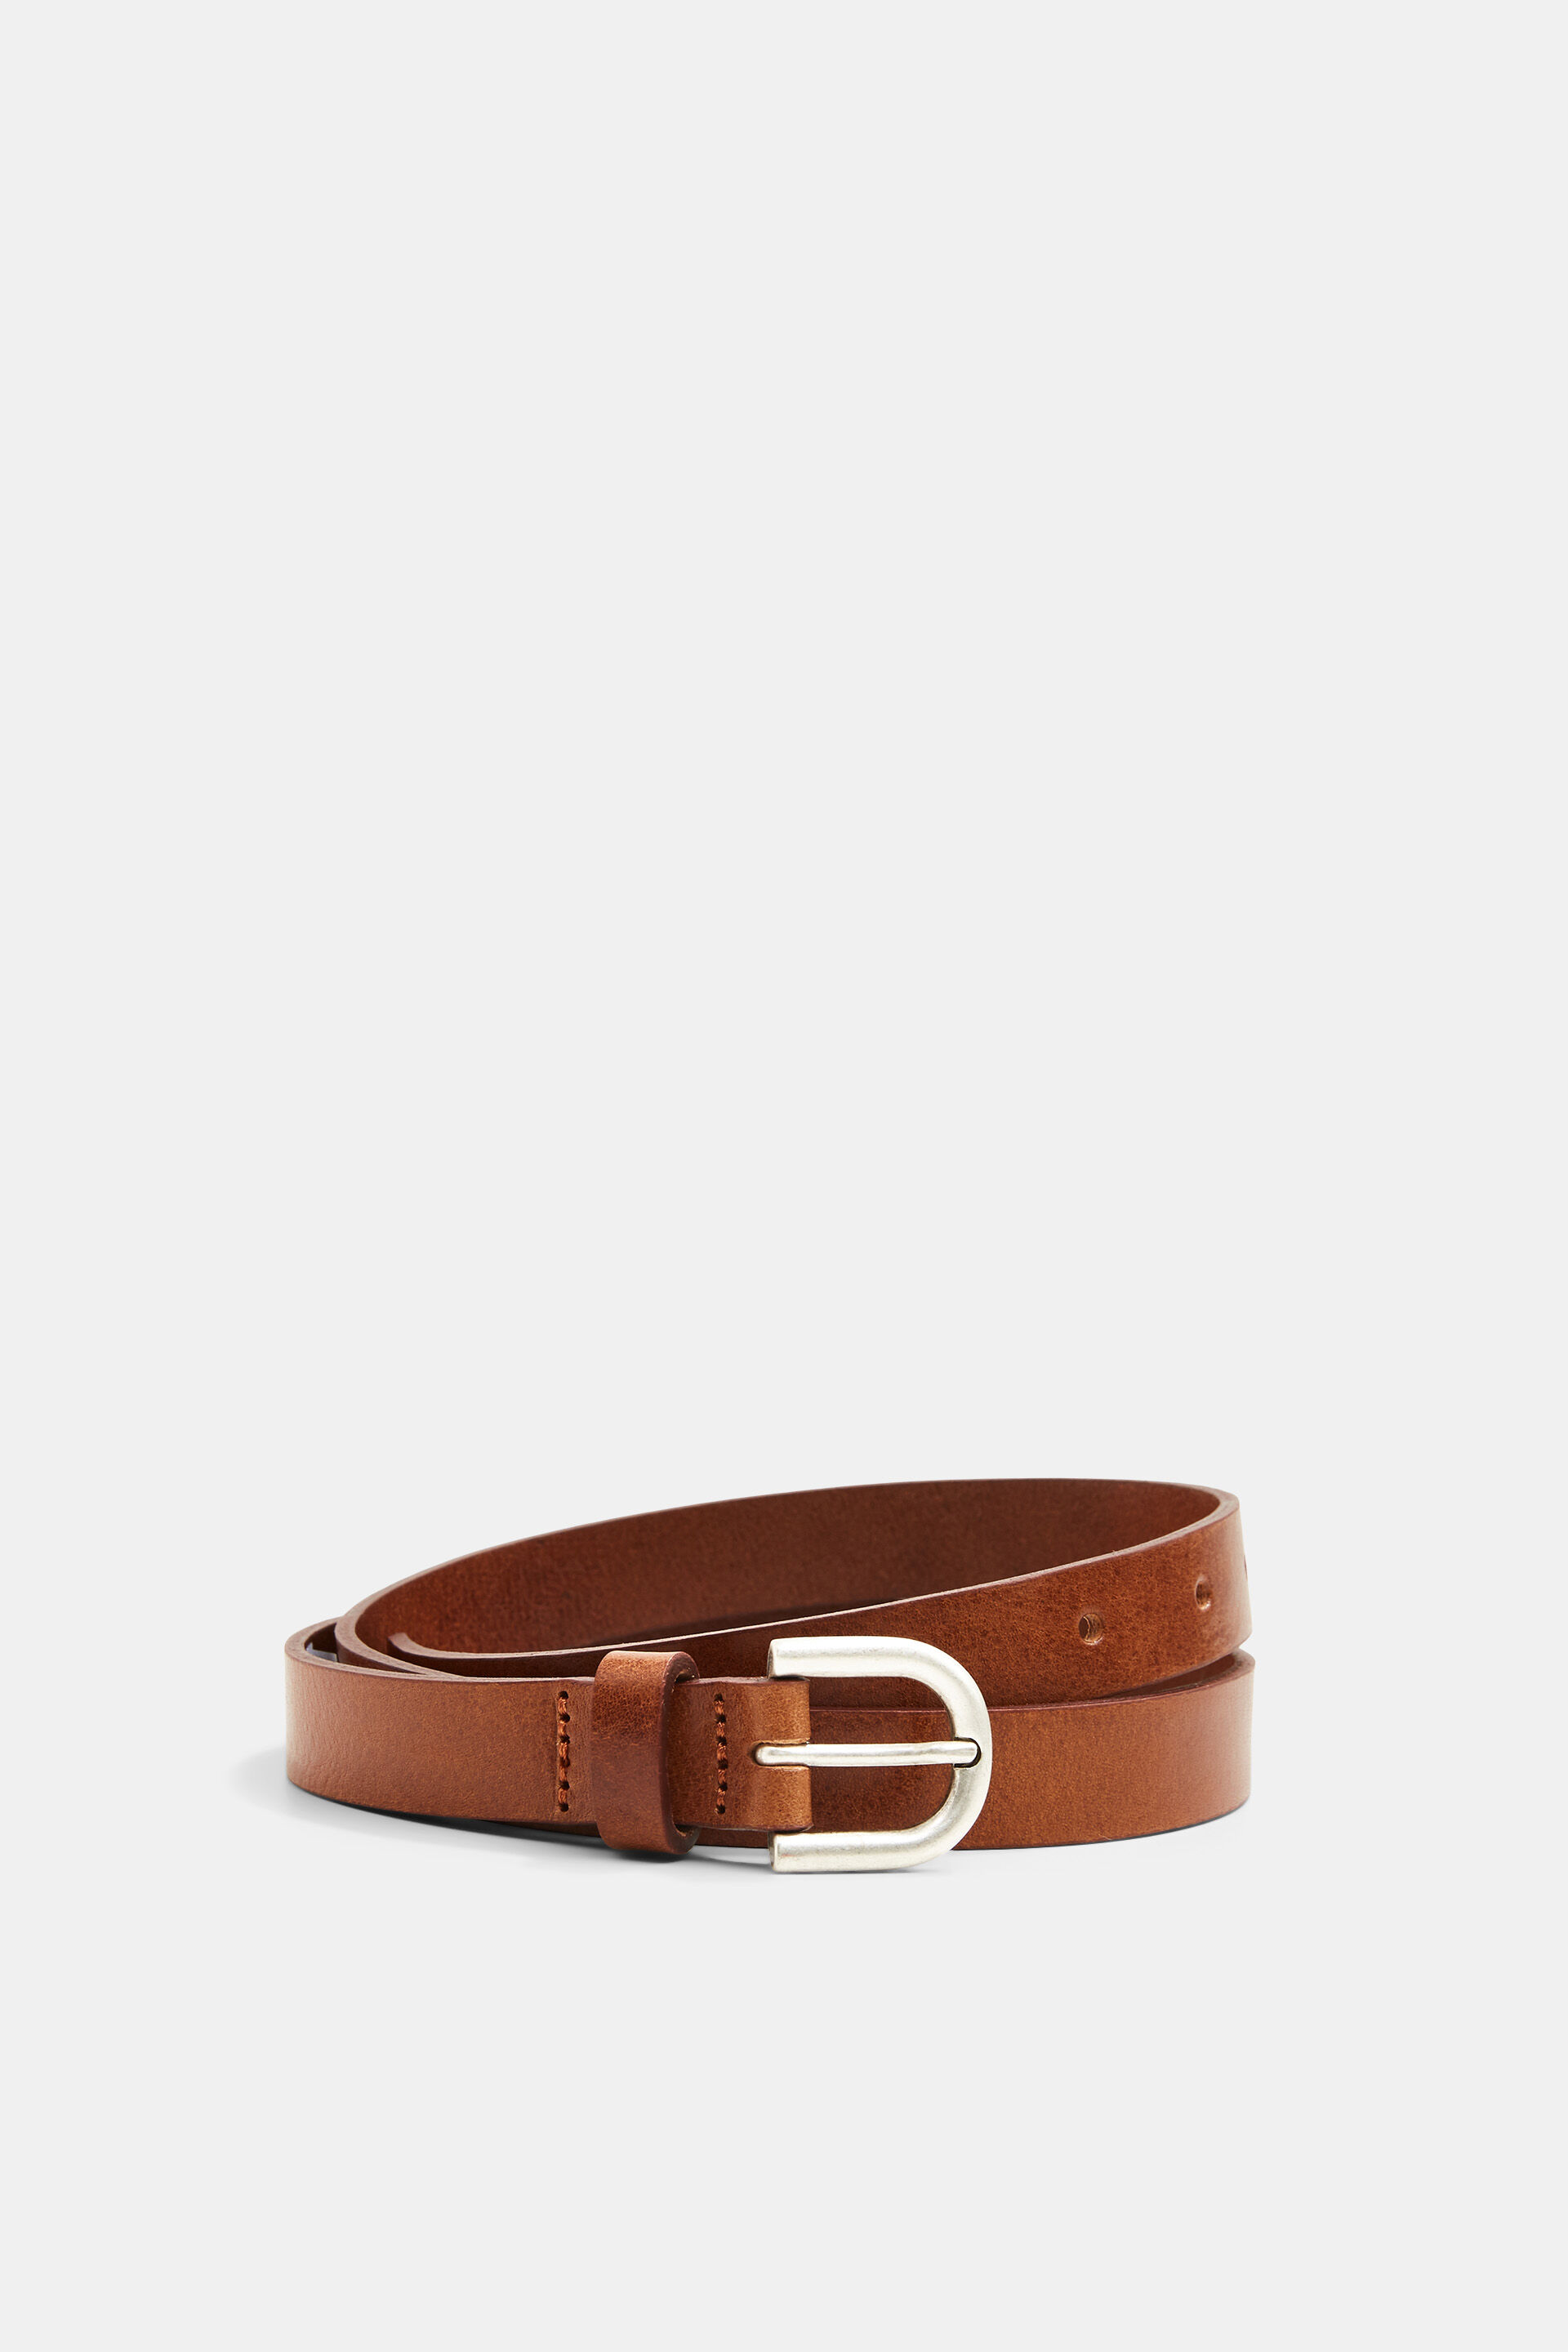 Esprit belt Narrow leather